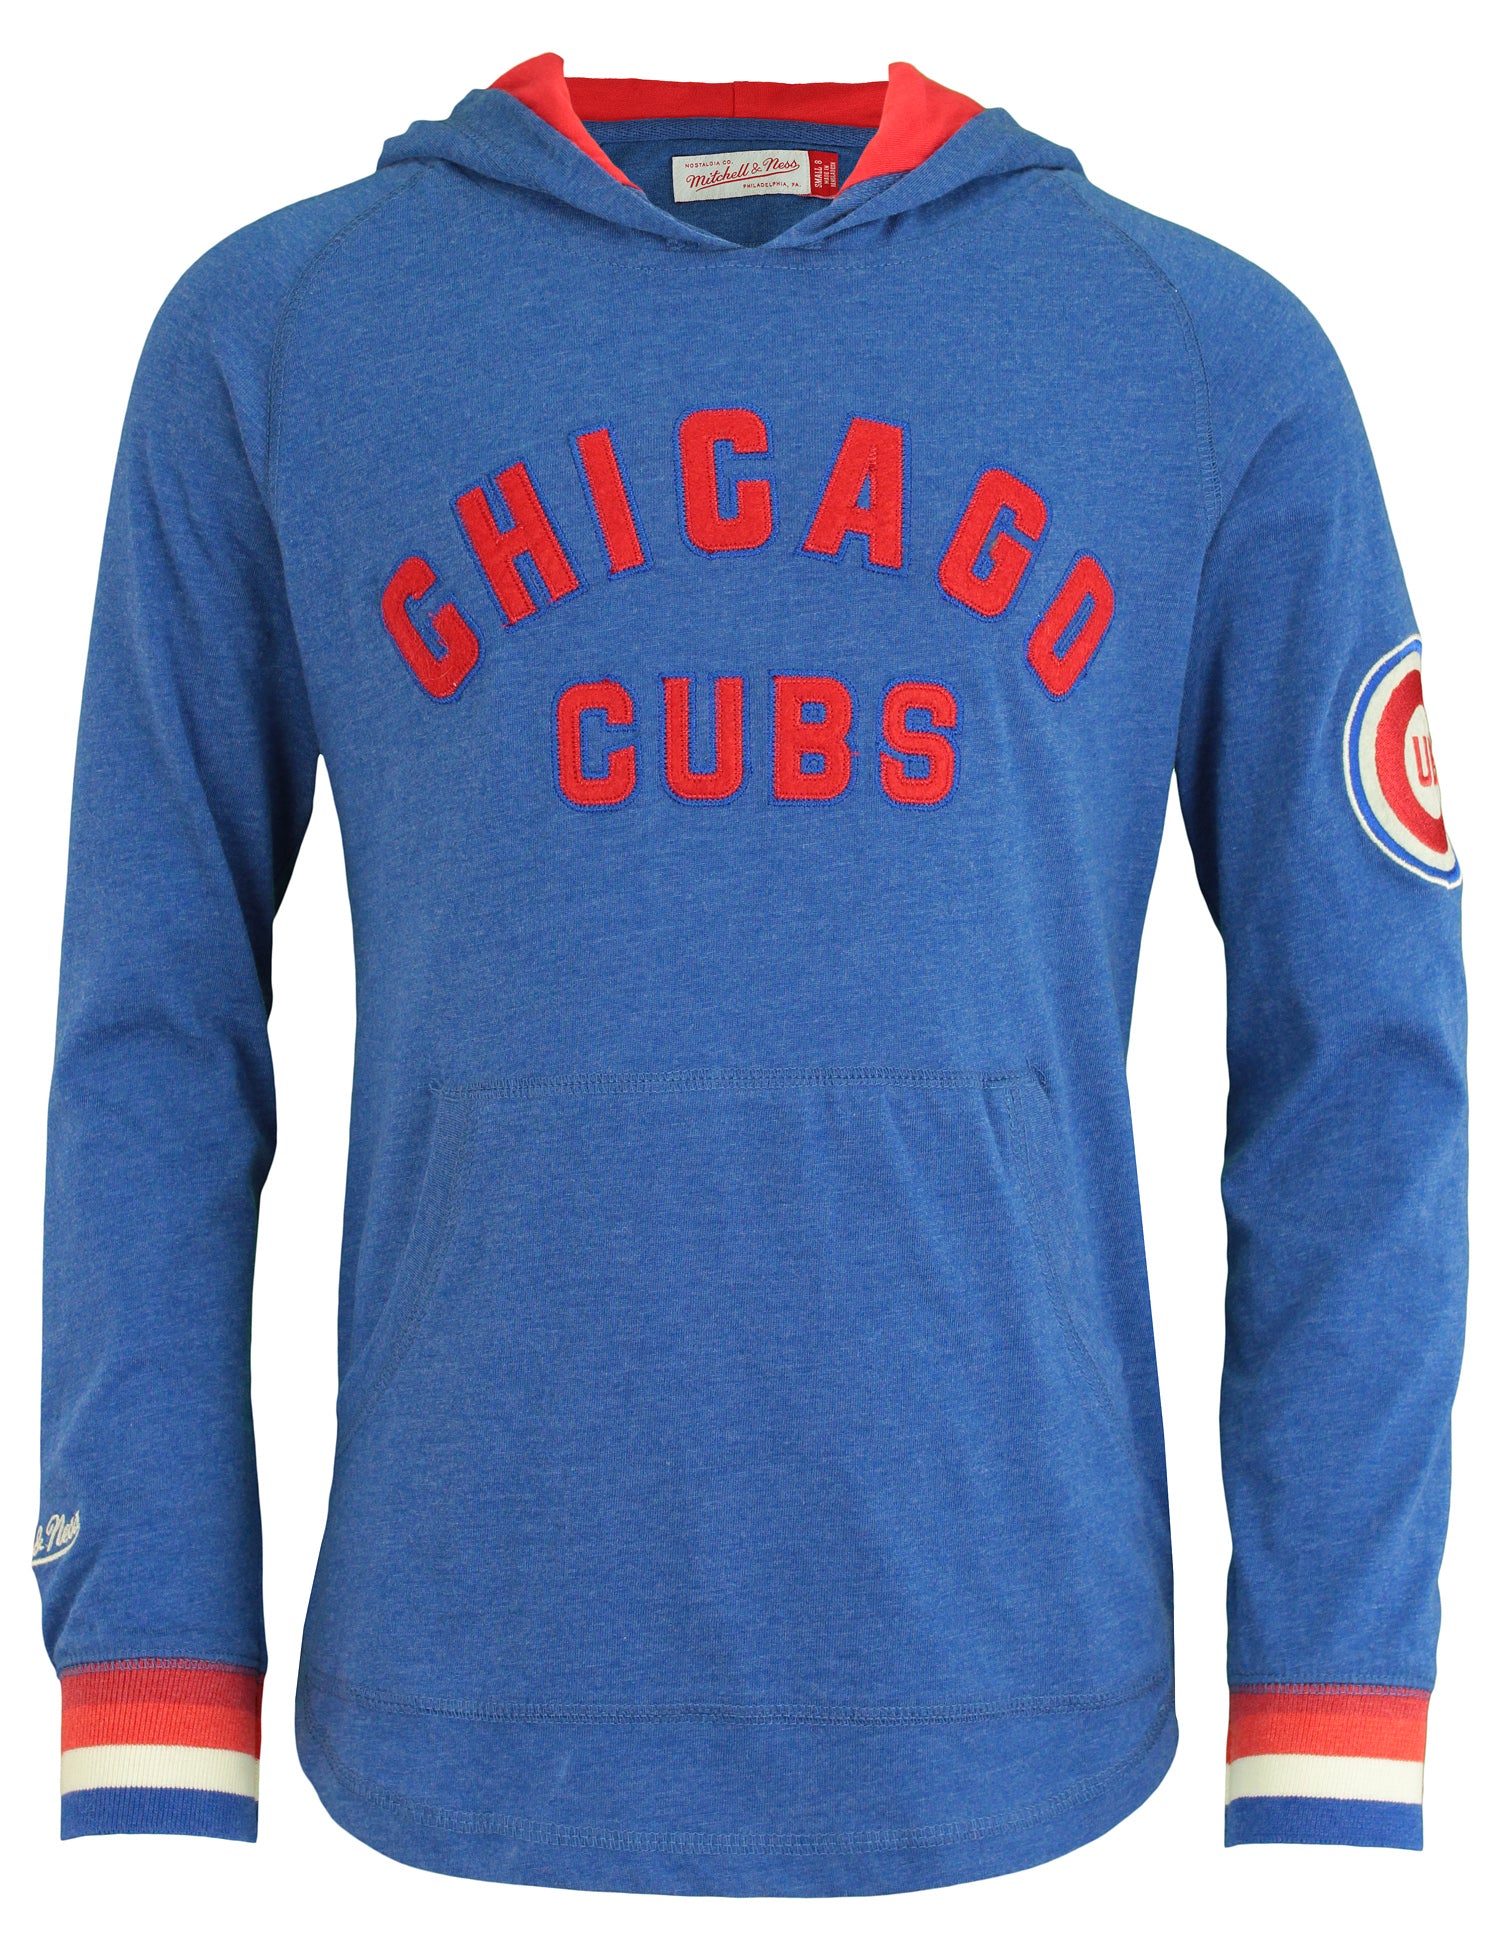 Outerstuff Chicago Cubs Pinstripe Youth T-Shirt Medium-10/12